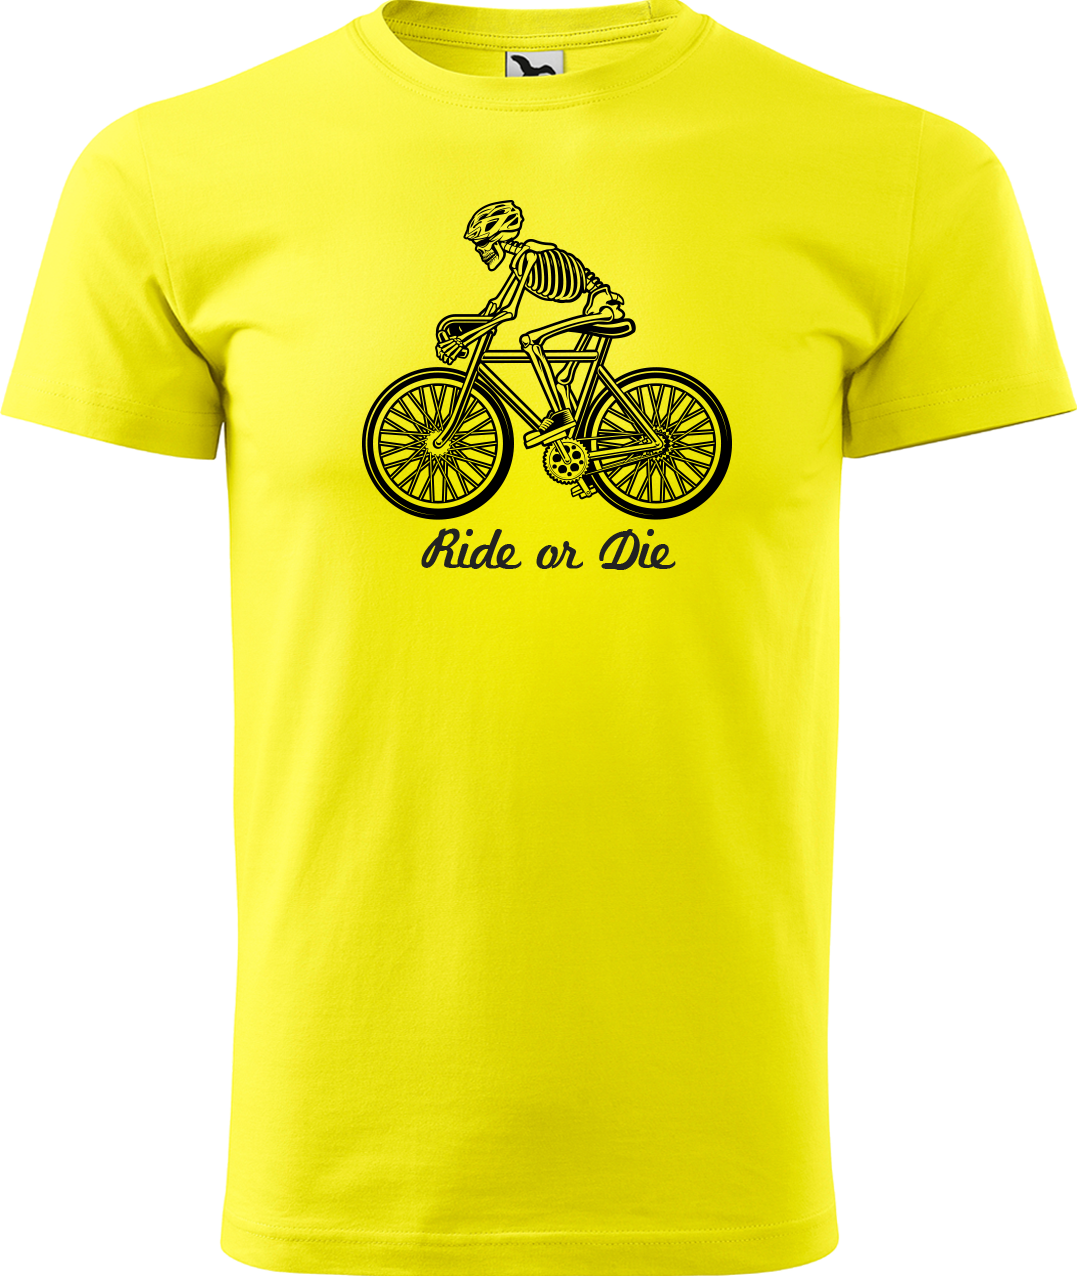 Pánské tričko pro cyklistu - Ride or Die Velikost: L, Barva: Žlutá (04)